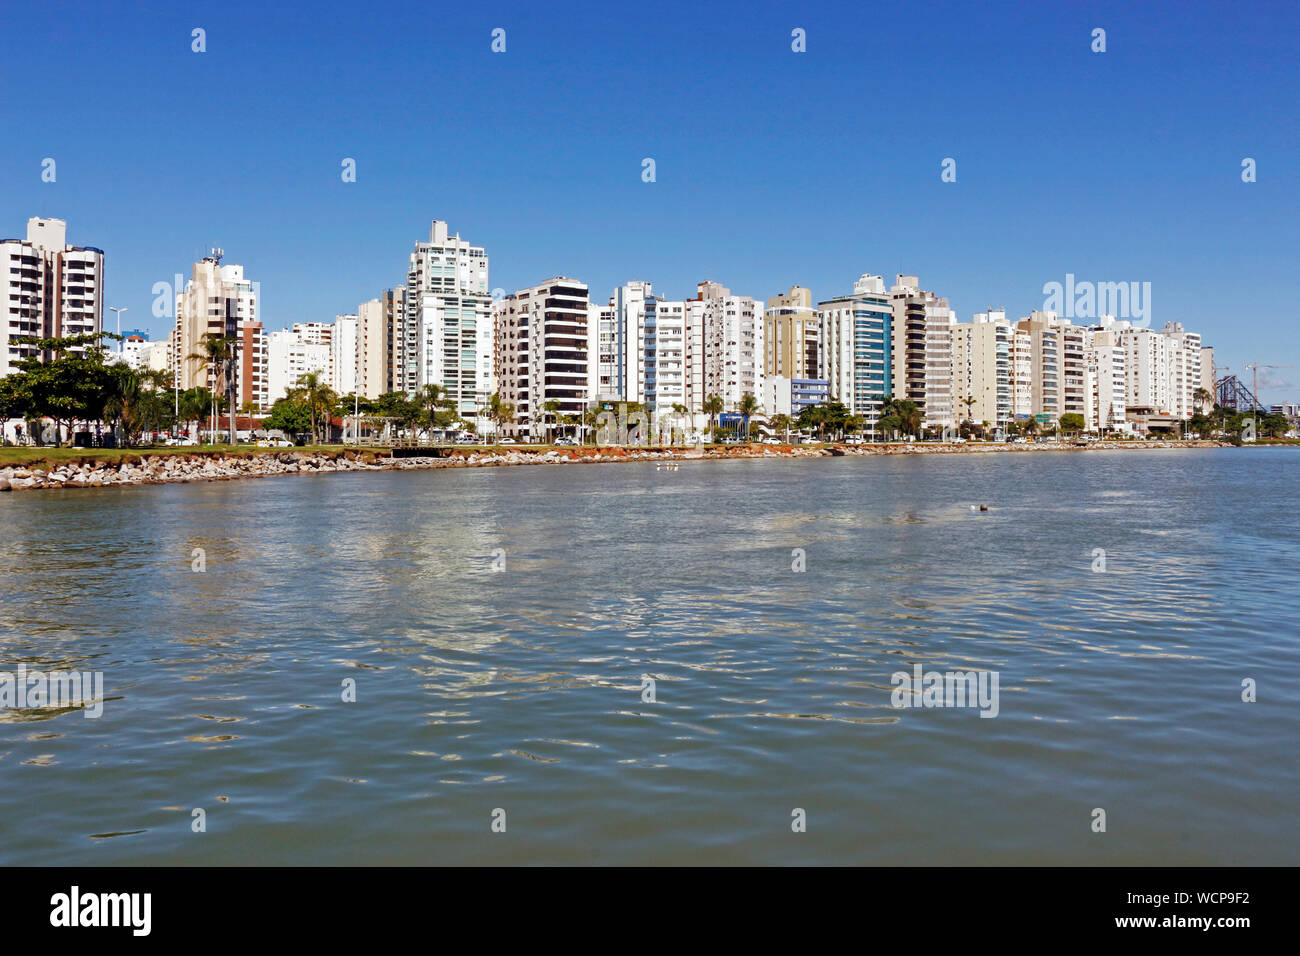 Beira Mar Norte Avenue, in the capital of Florianópolis, state of Santa Catarina - Brazil Stock Photo